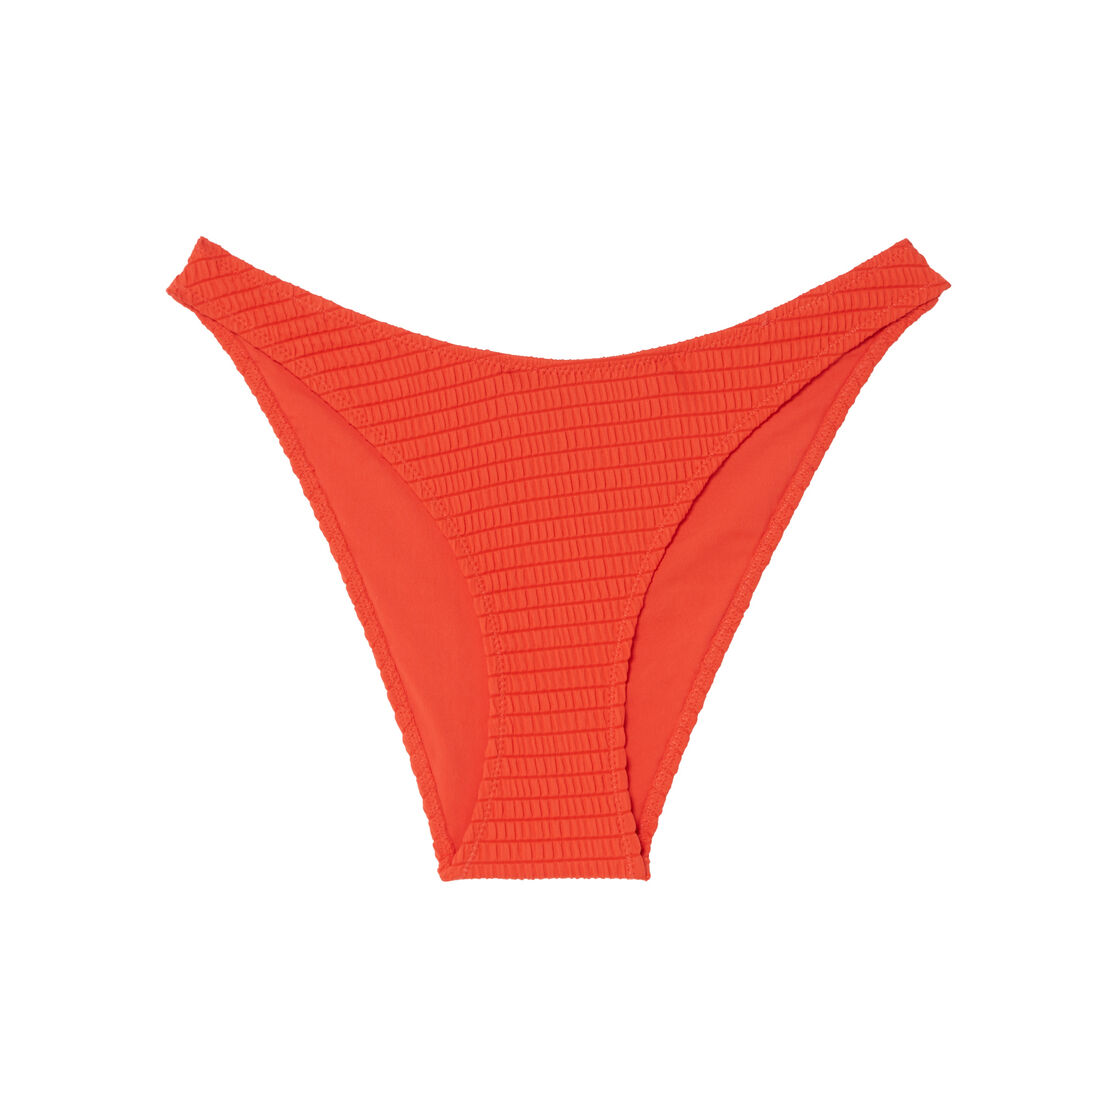 high-leg bikini bottoms - orange-red;